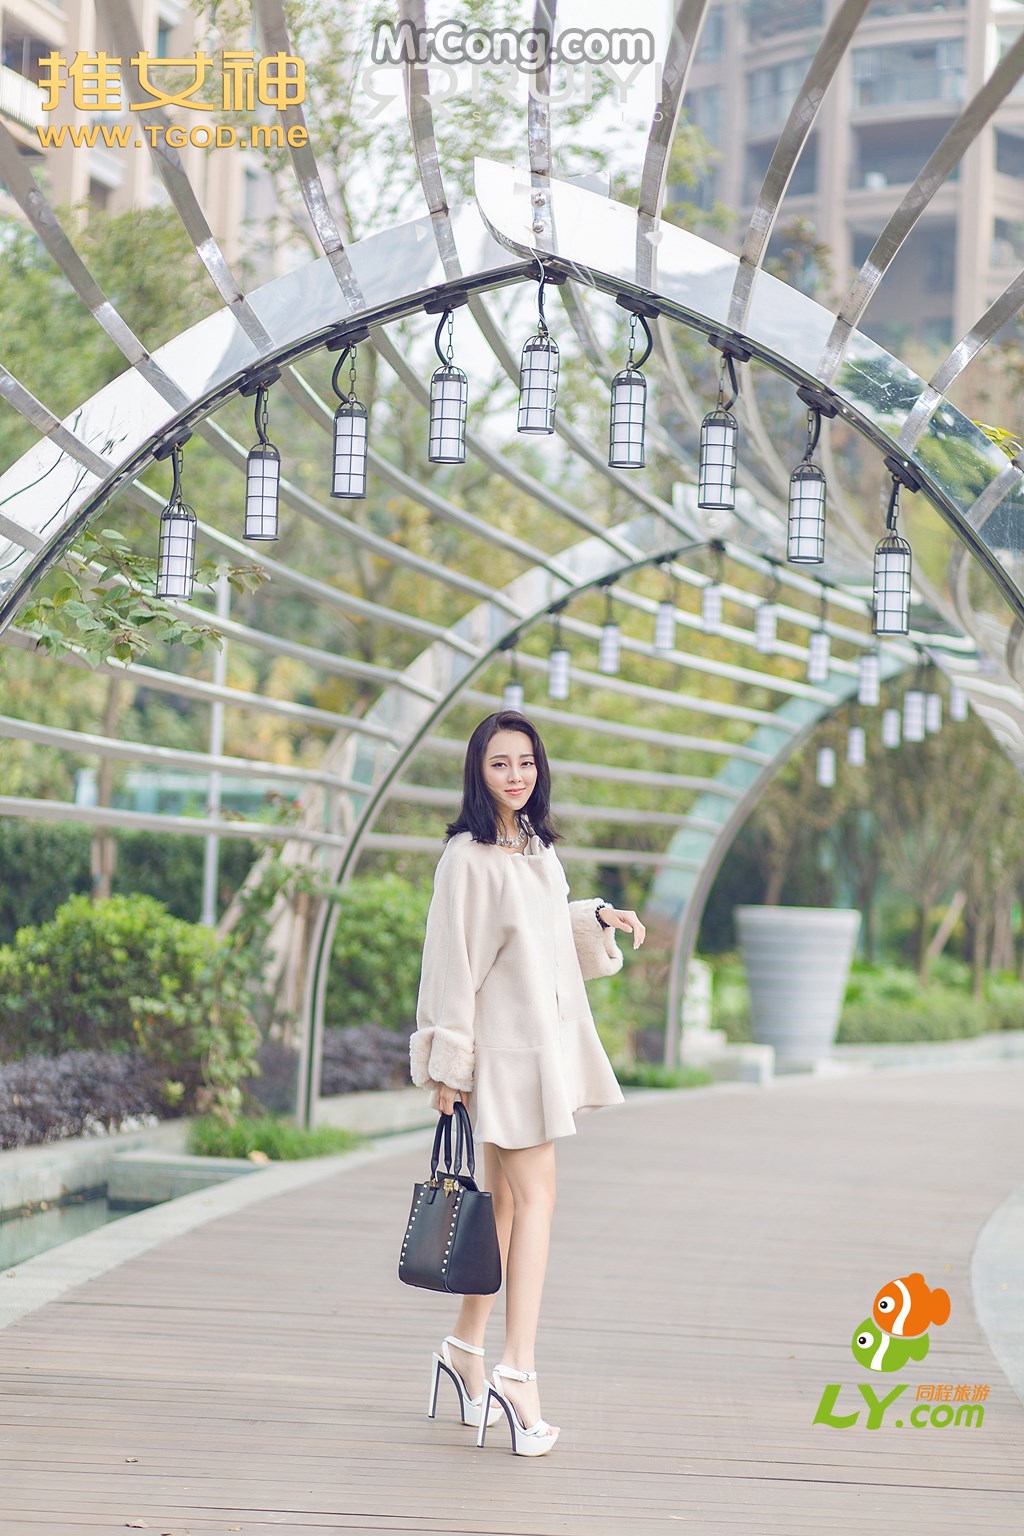 TGOD 2015-01-05: Model Liang Jing Ying (梁晶莹) (54 photos) photo 2-8